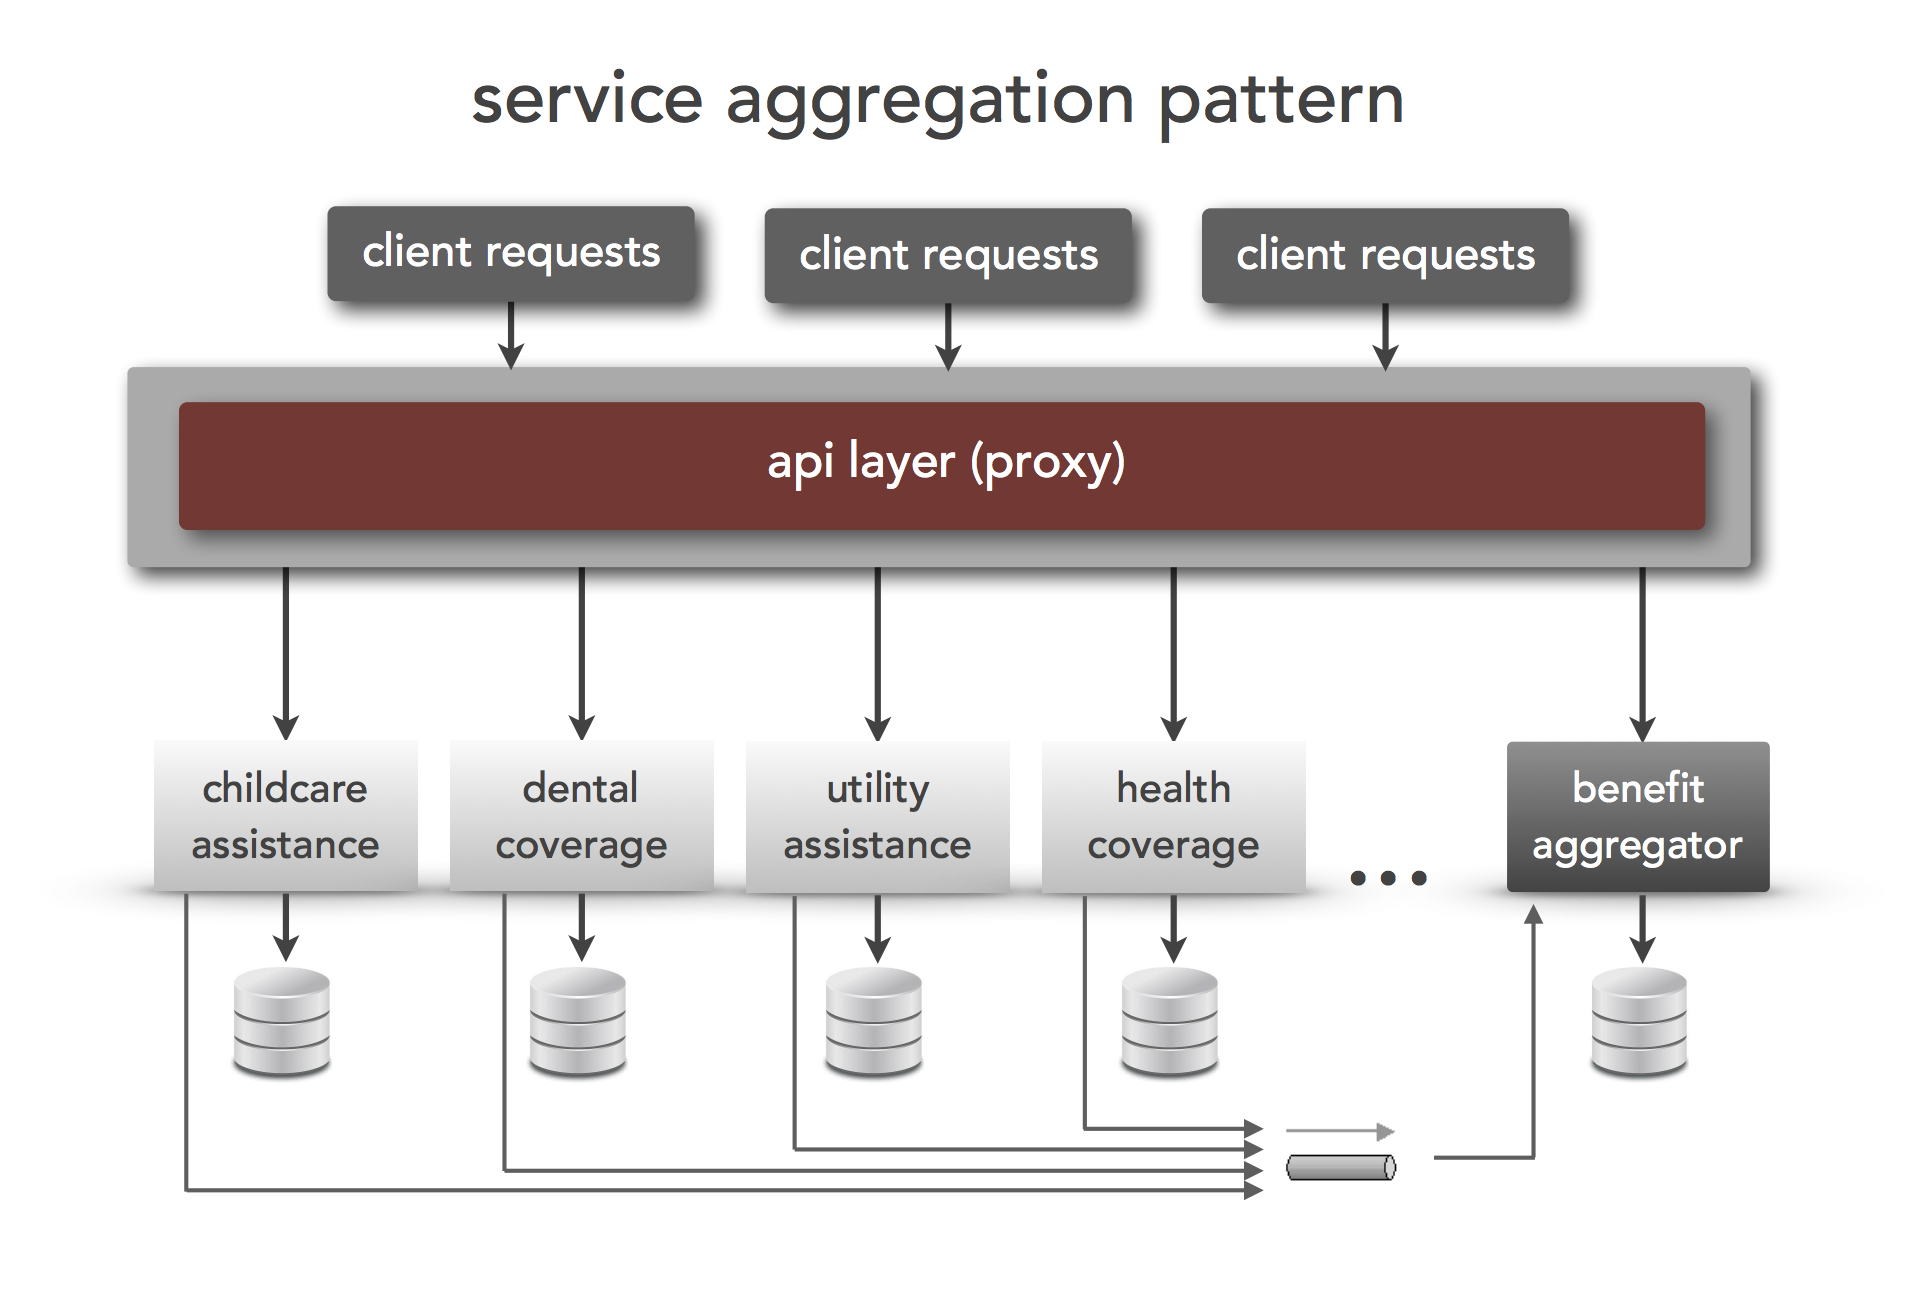 Service aggregation pattern